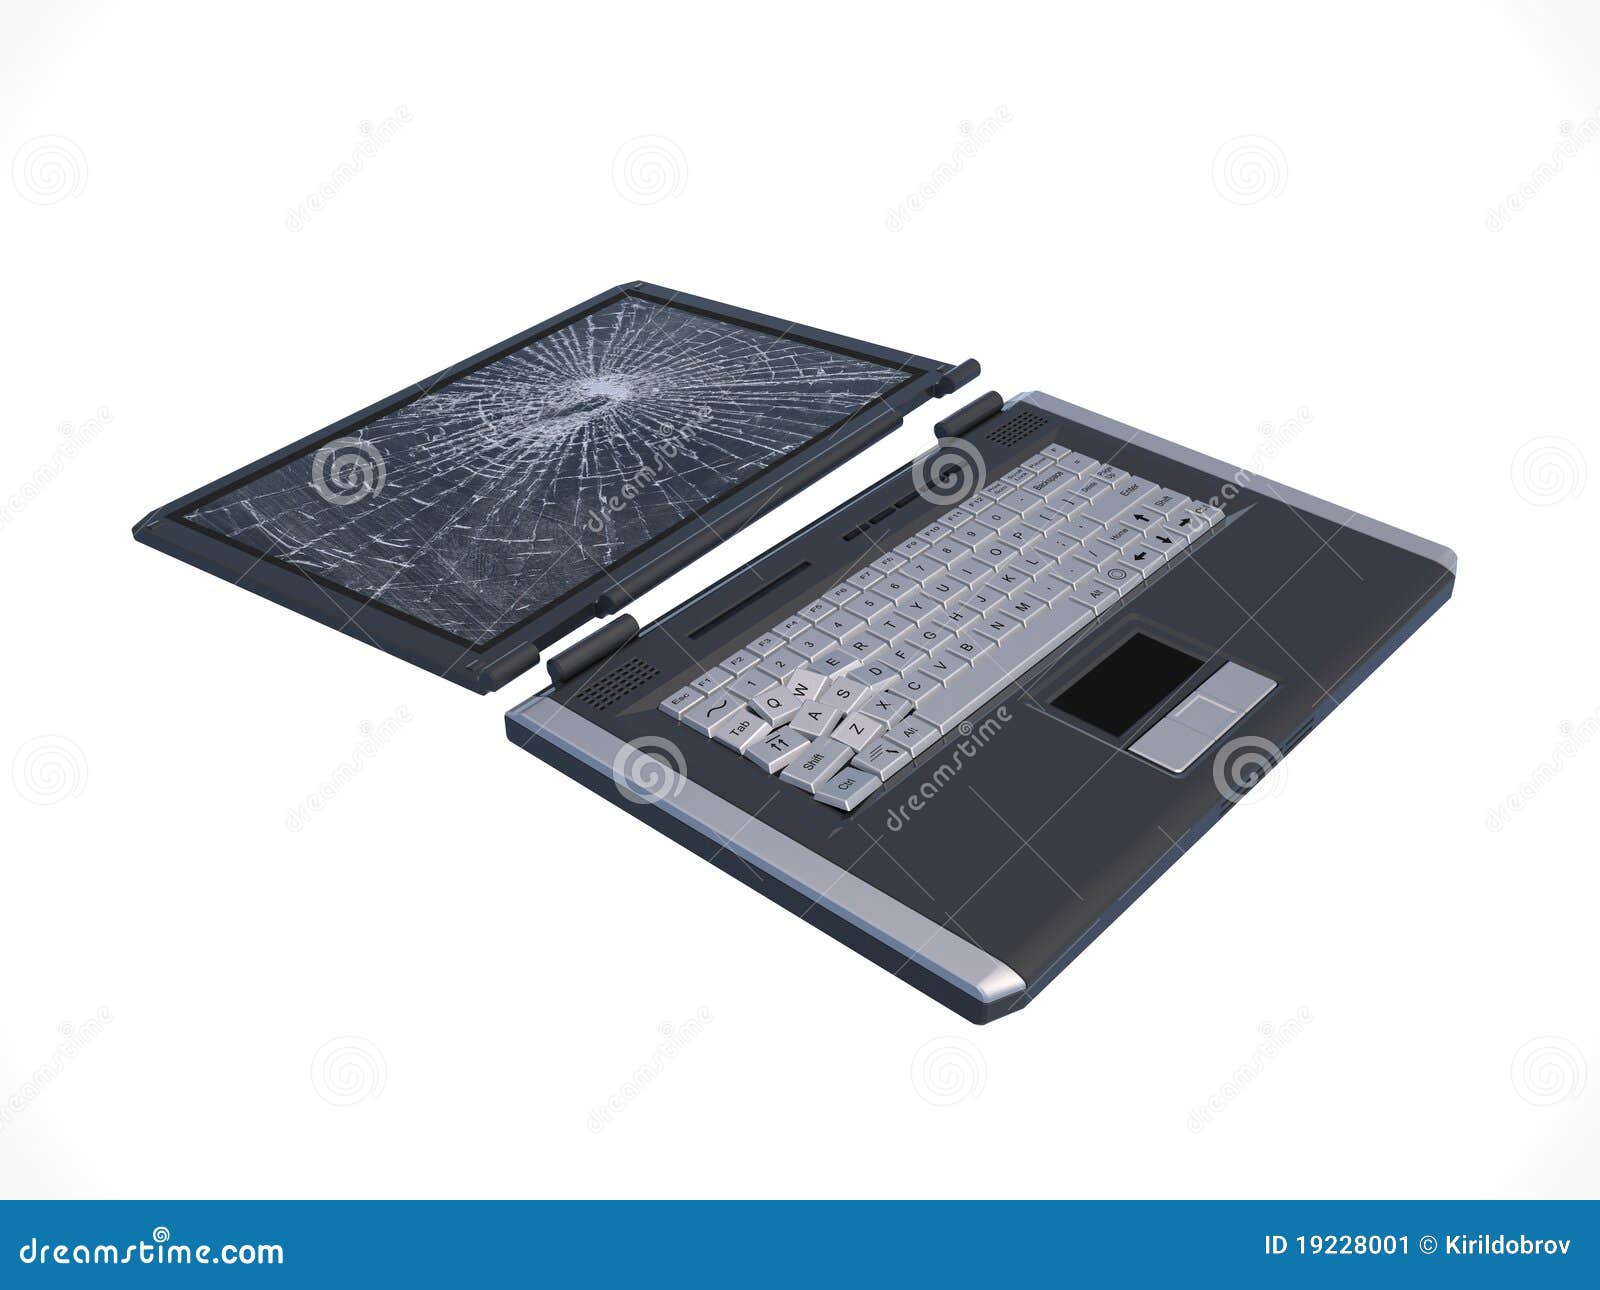 broken-laptop-19228001.jpg